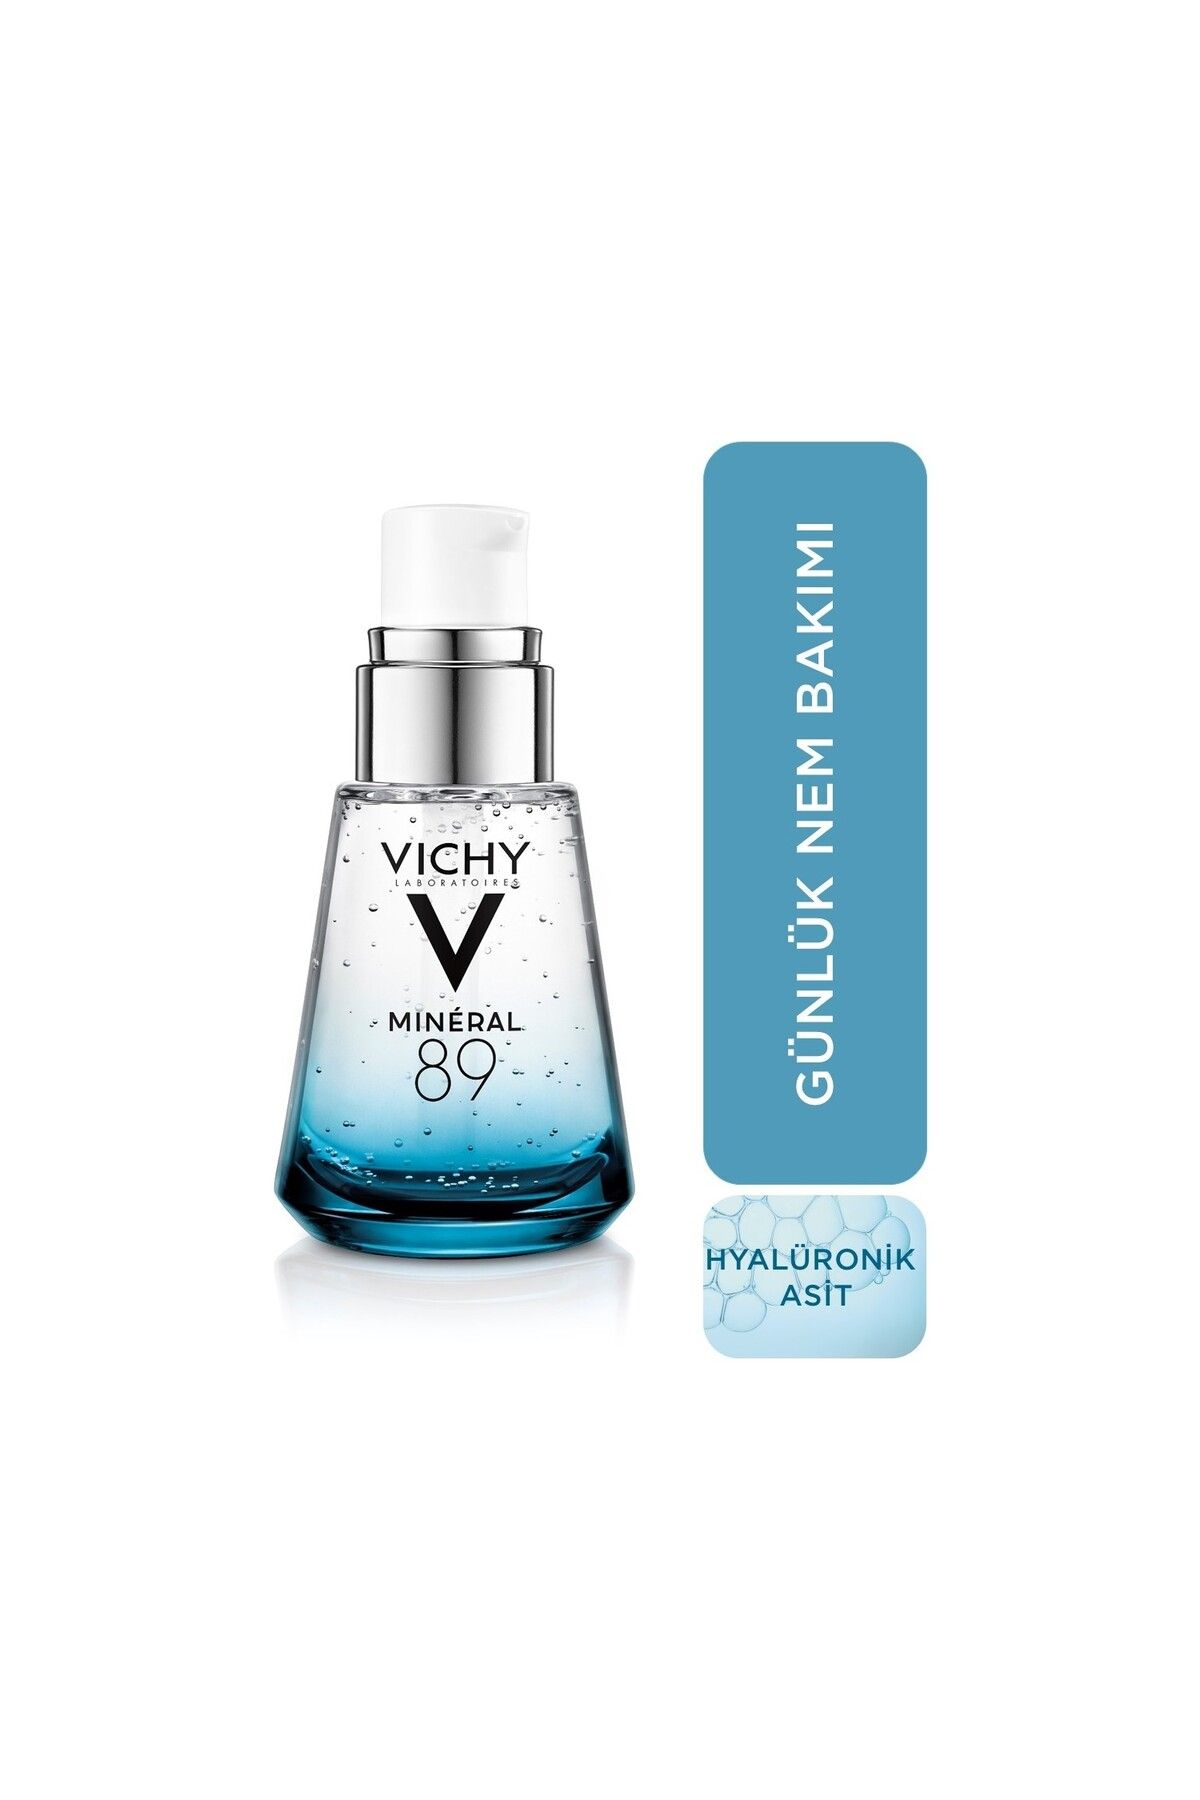 Vichy Mineral 89% Mineralizing Water + Hyaluronic Acid 30 ml Serum..vichy.